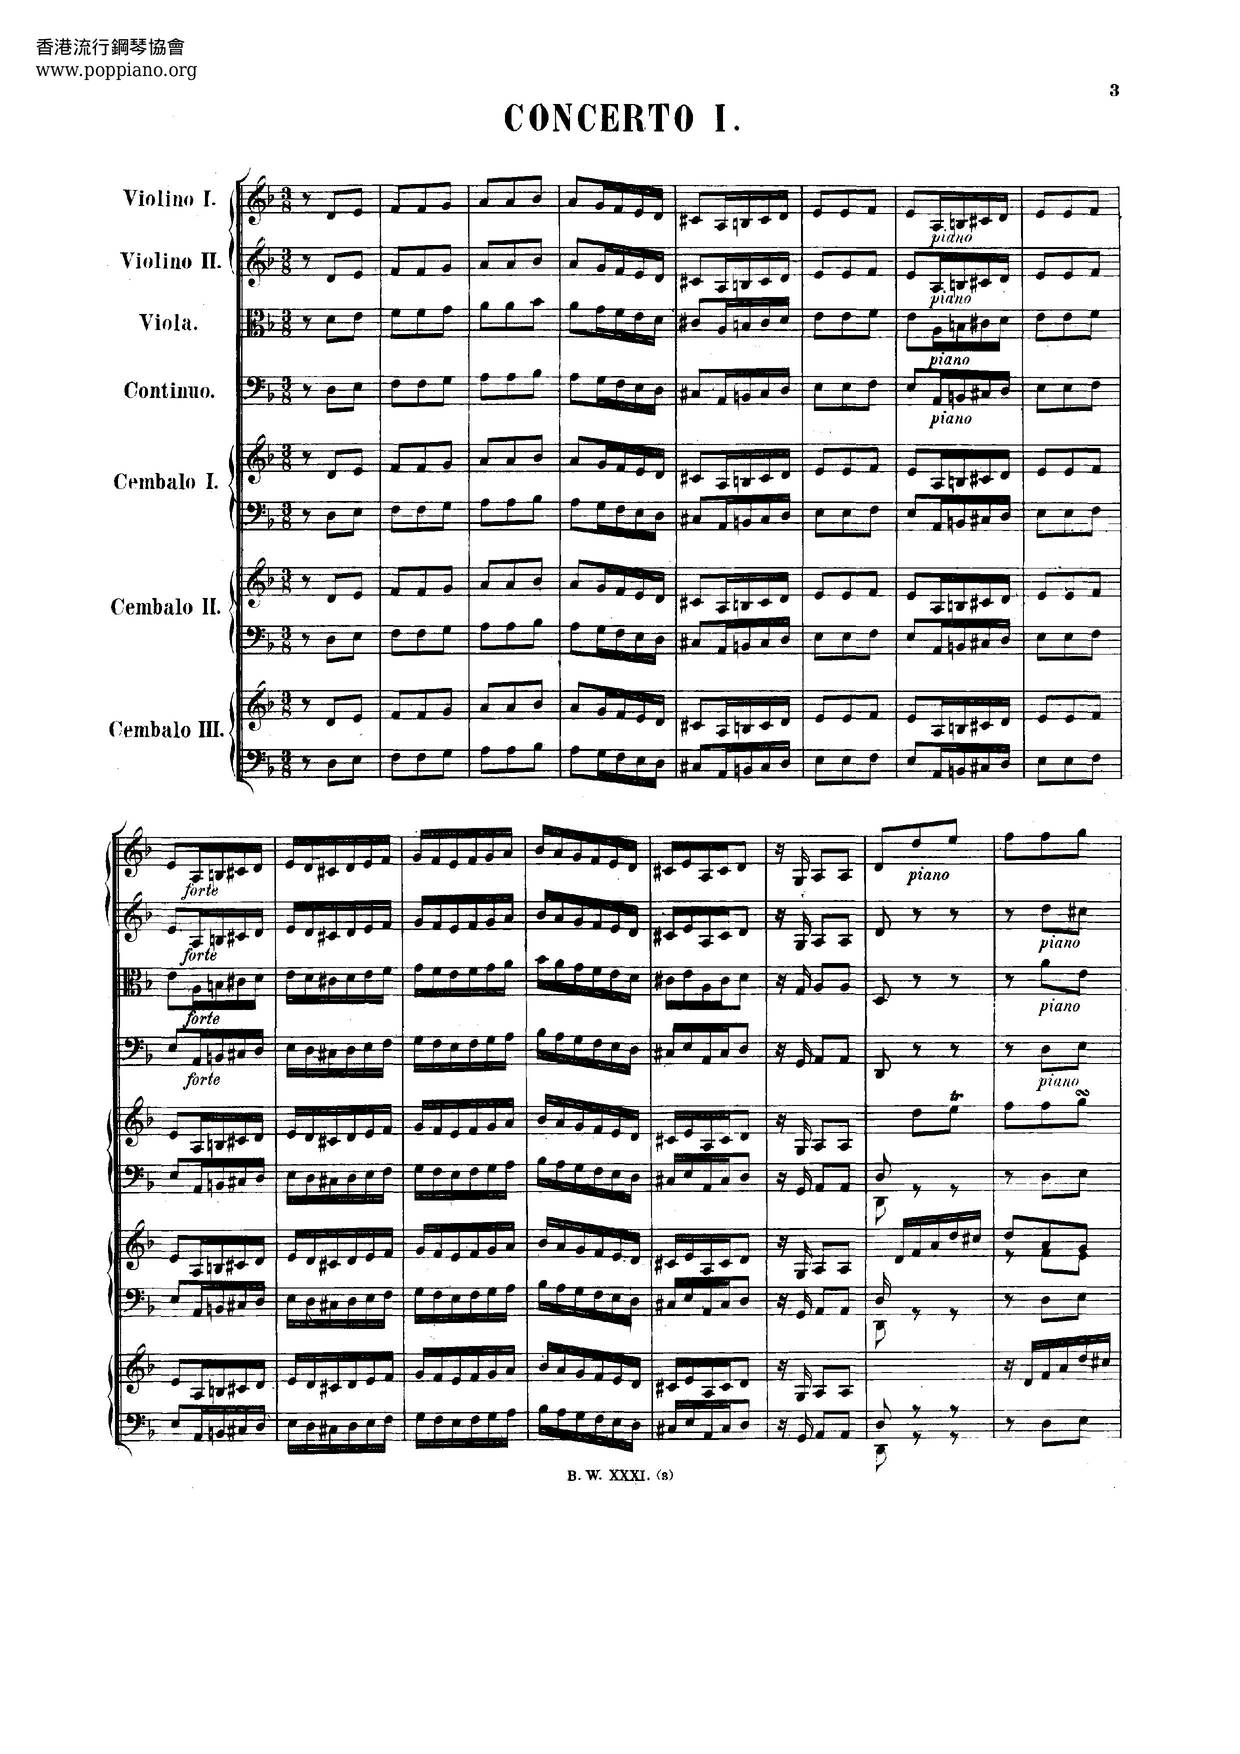 Concerto For 3 Harpsichords In D Minor, BWV 1063 Score